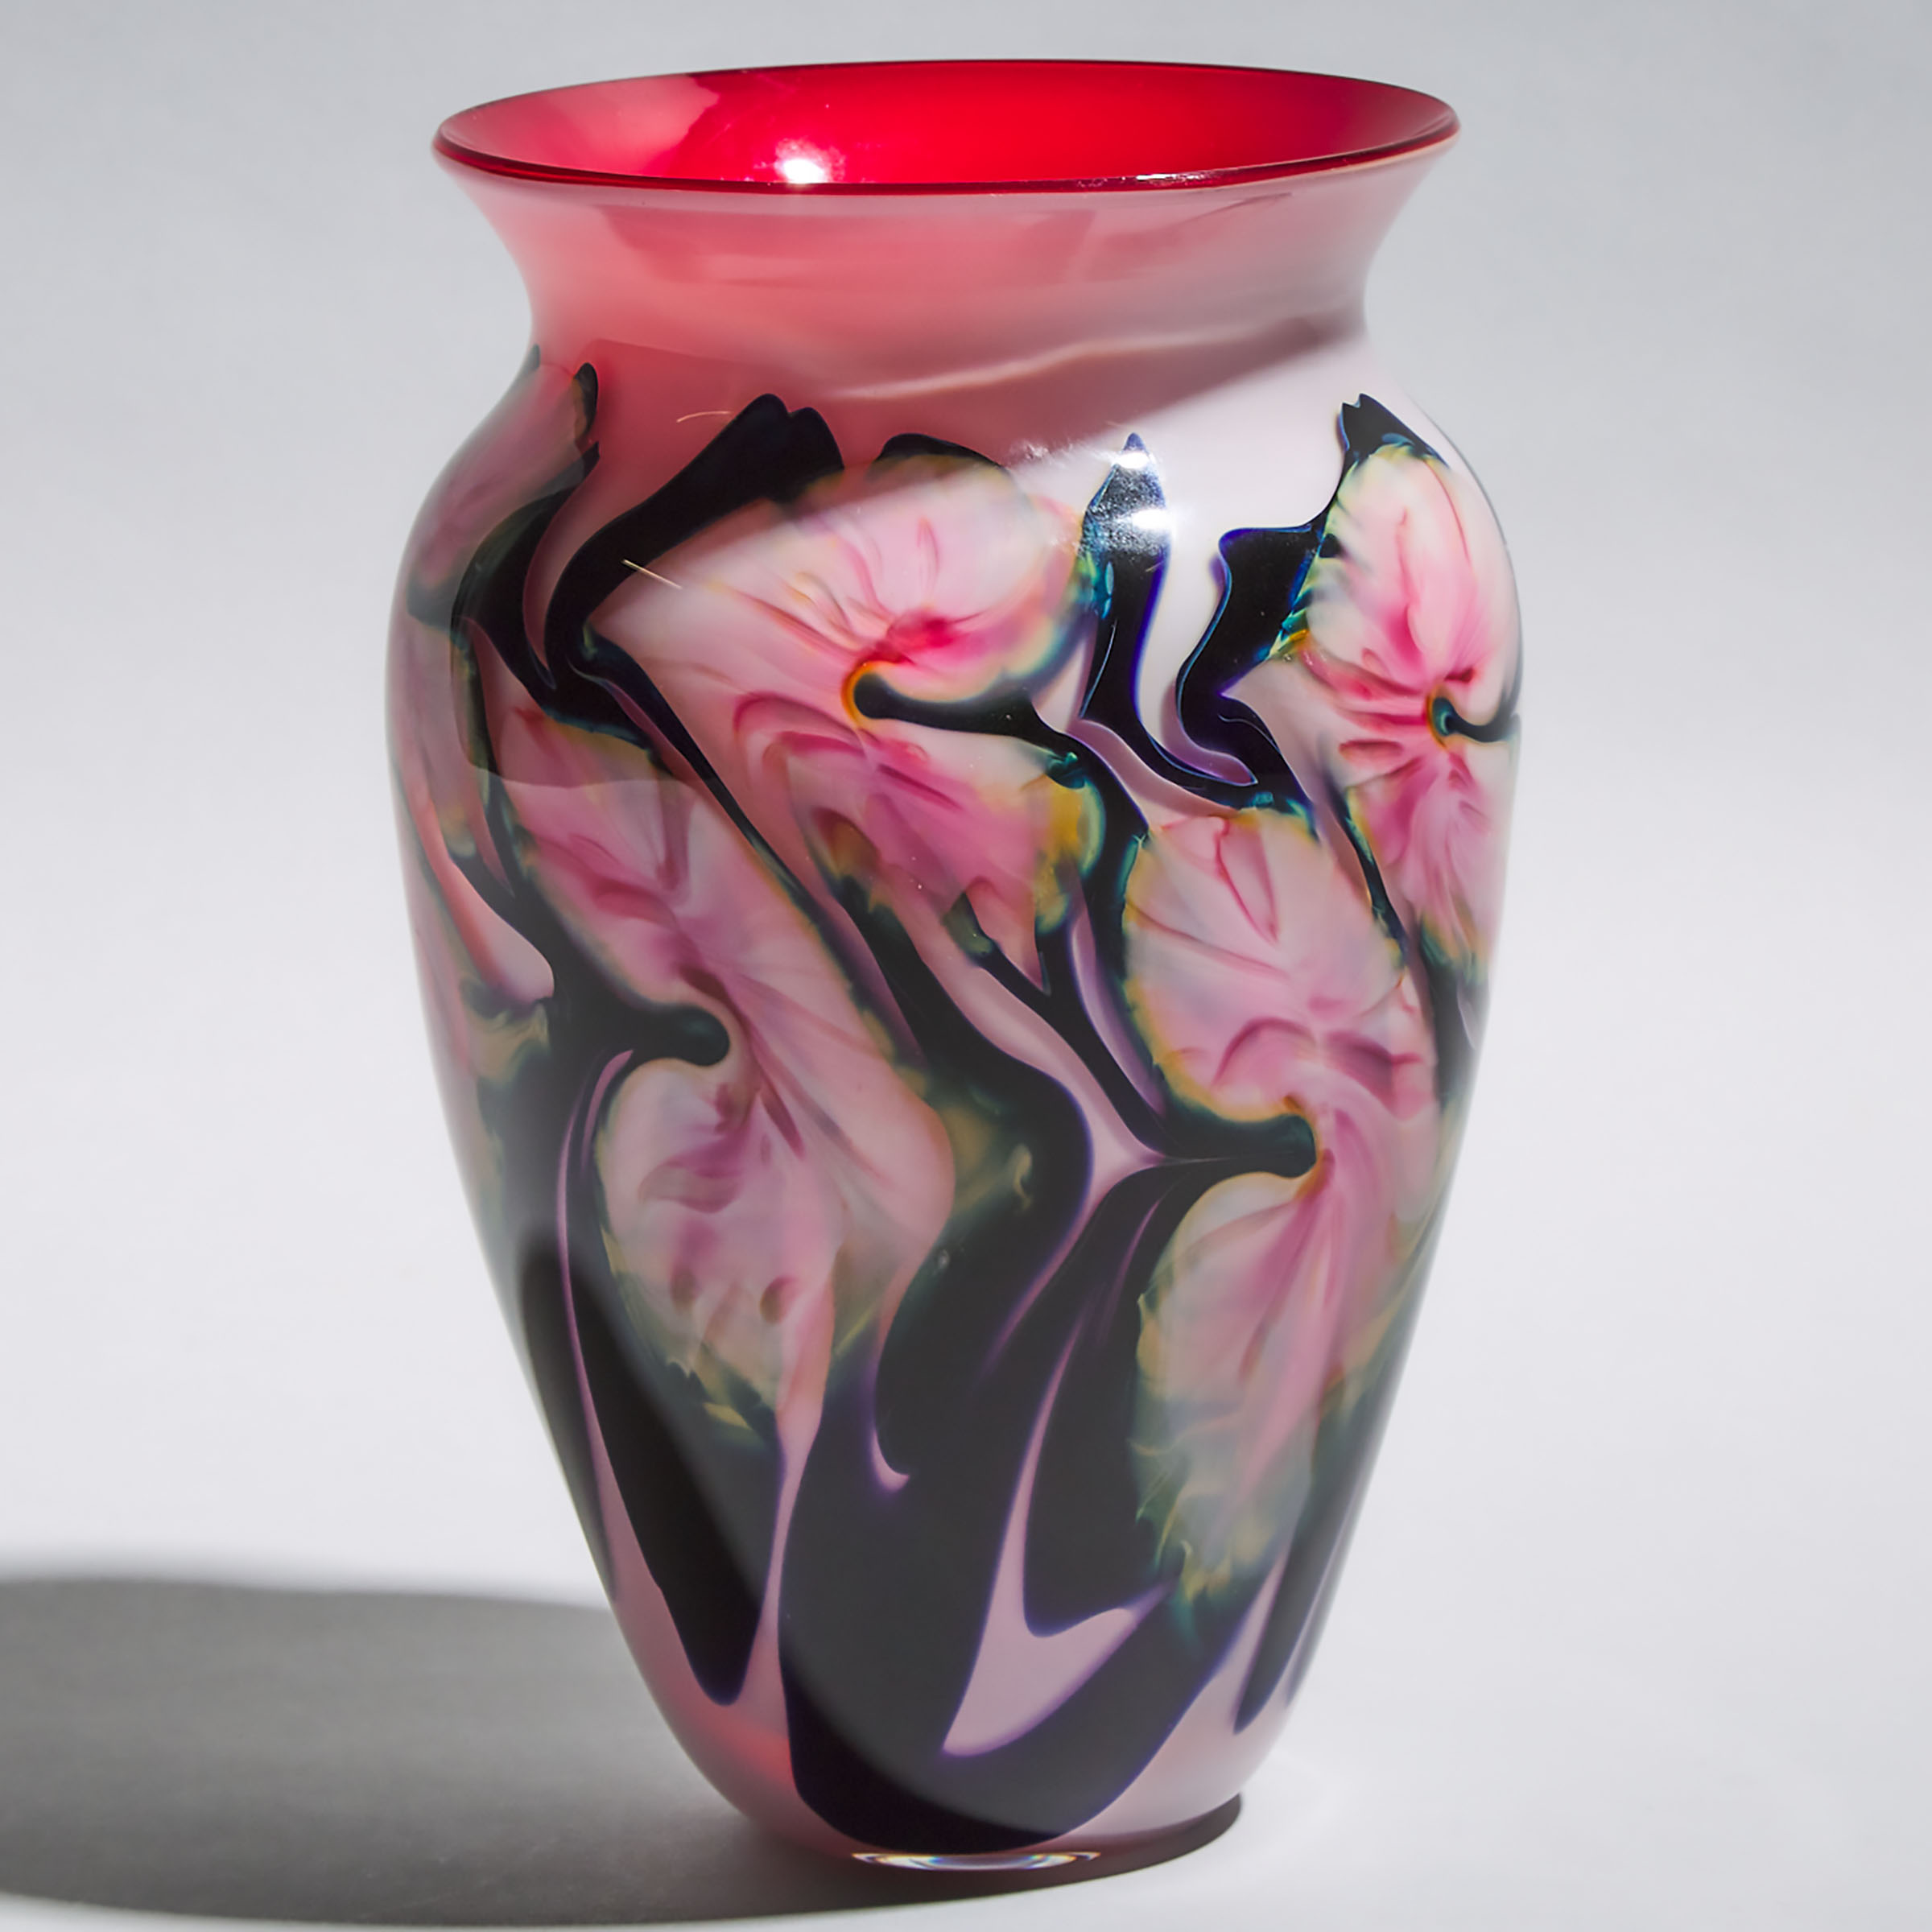 John Lotton (American, b.1964), 'Leaf and Vine' Glass Vase, dated 1991